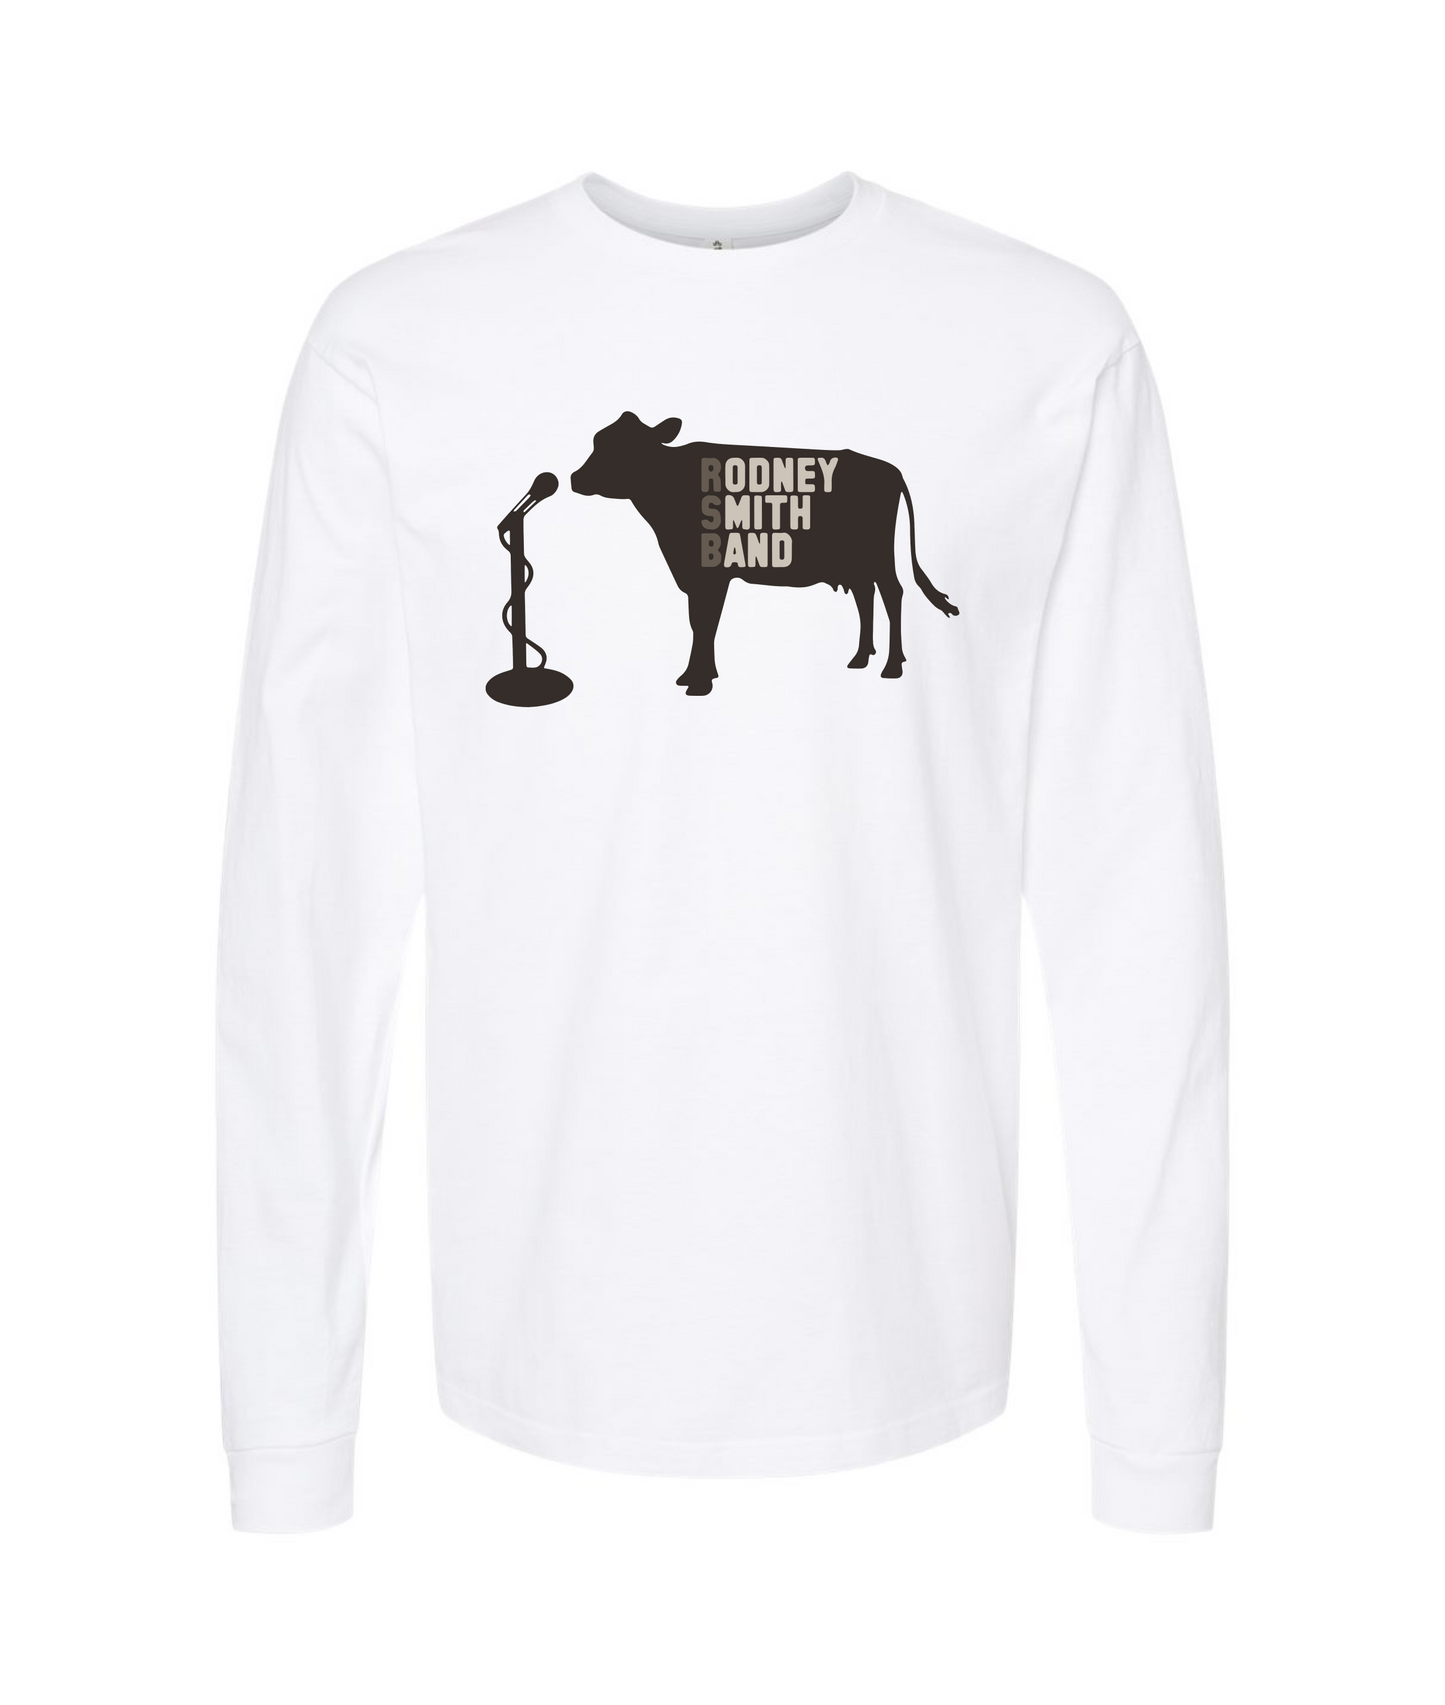 Rodney Smith Band - Cow Logo - White Long Sleeve T